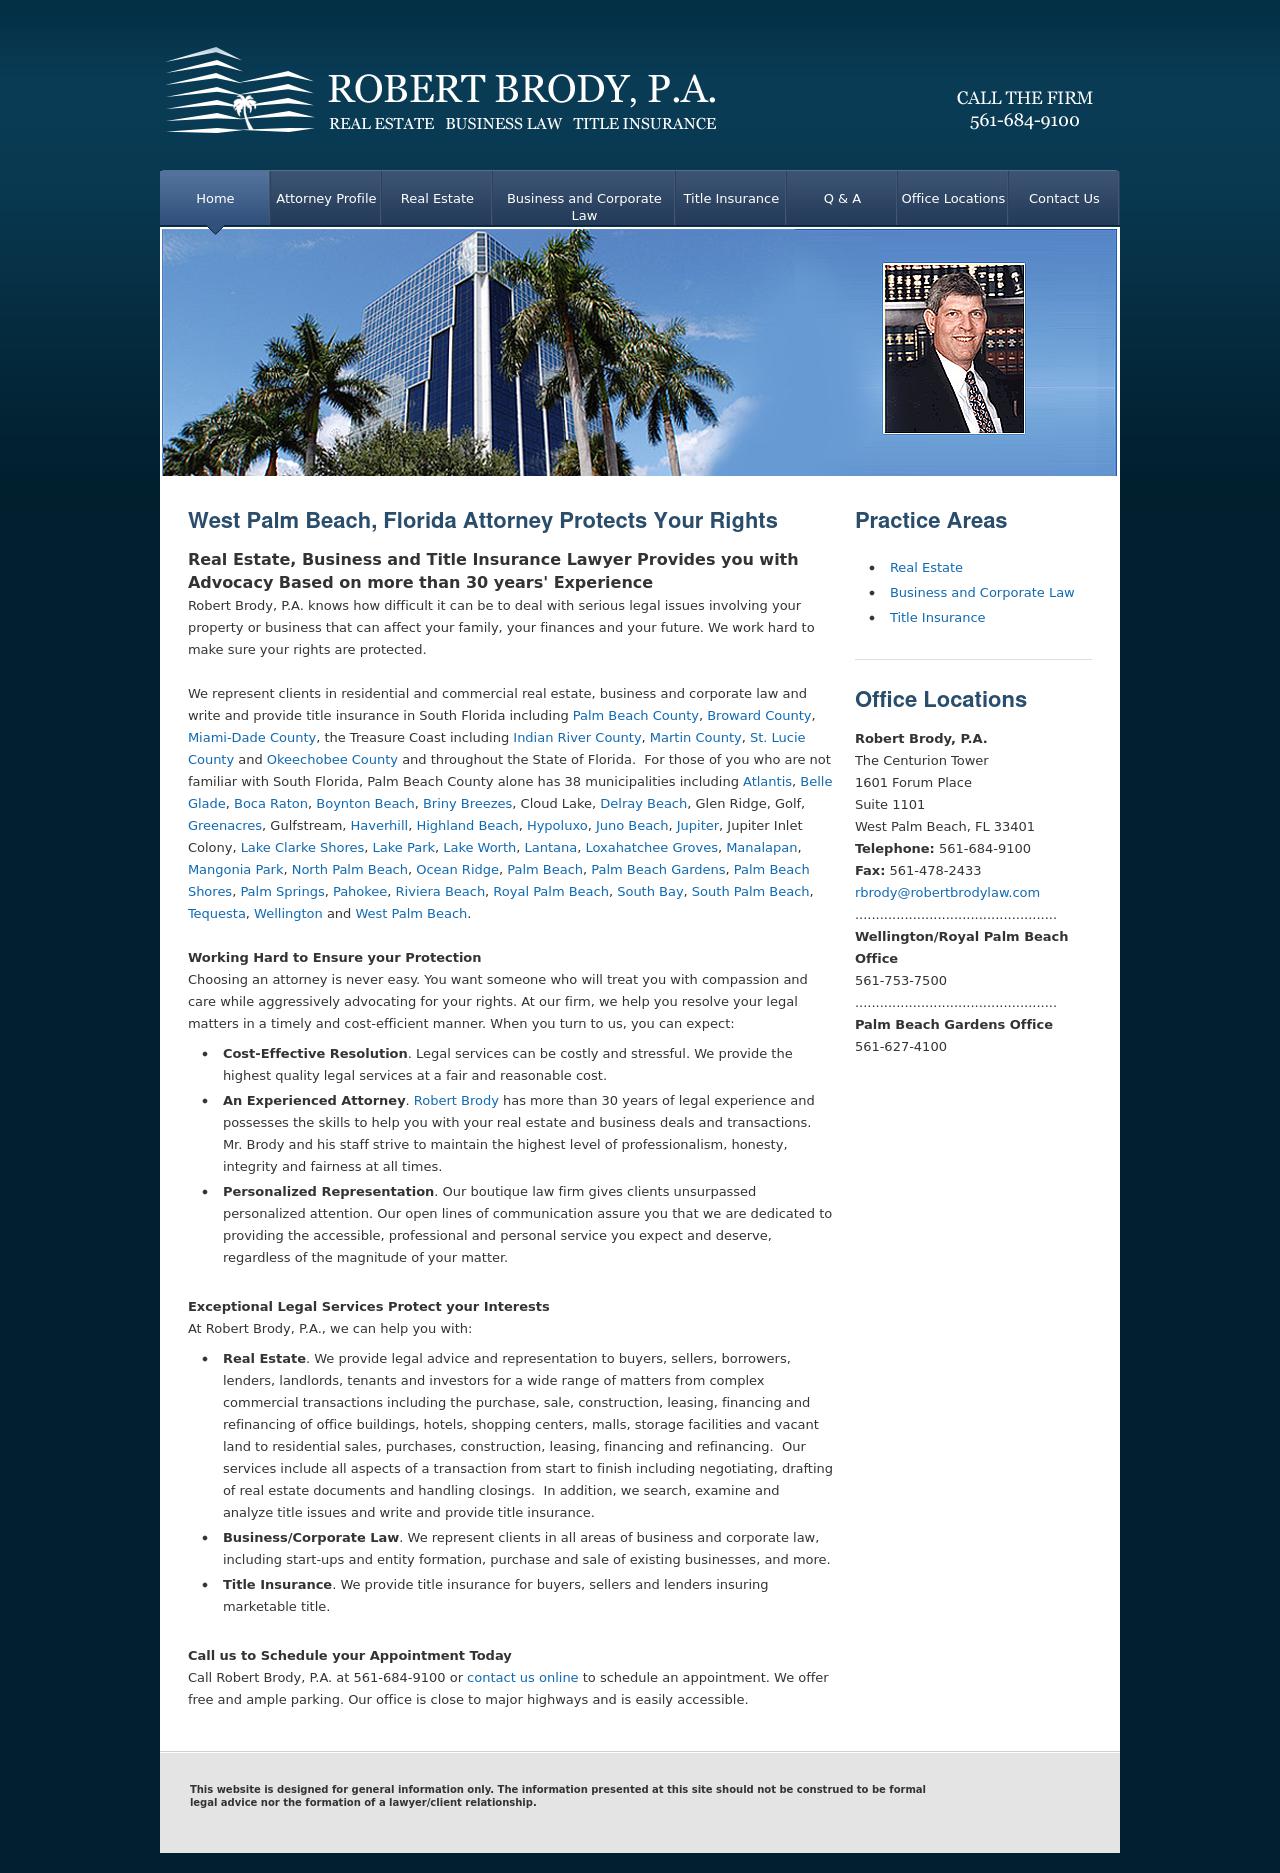 Brody Robert - Palm Beach Gardens FL Lawyers